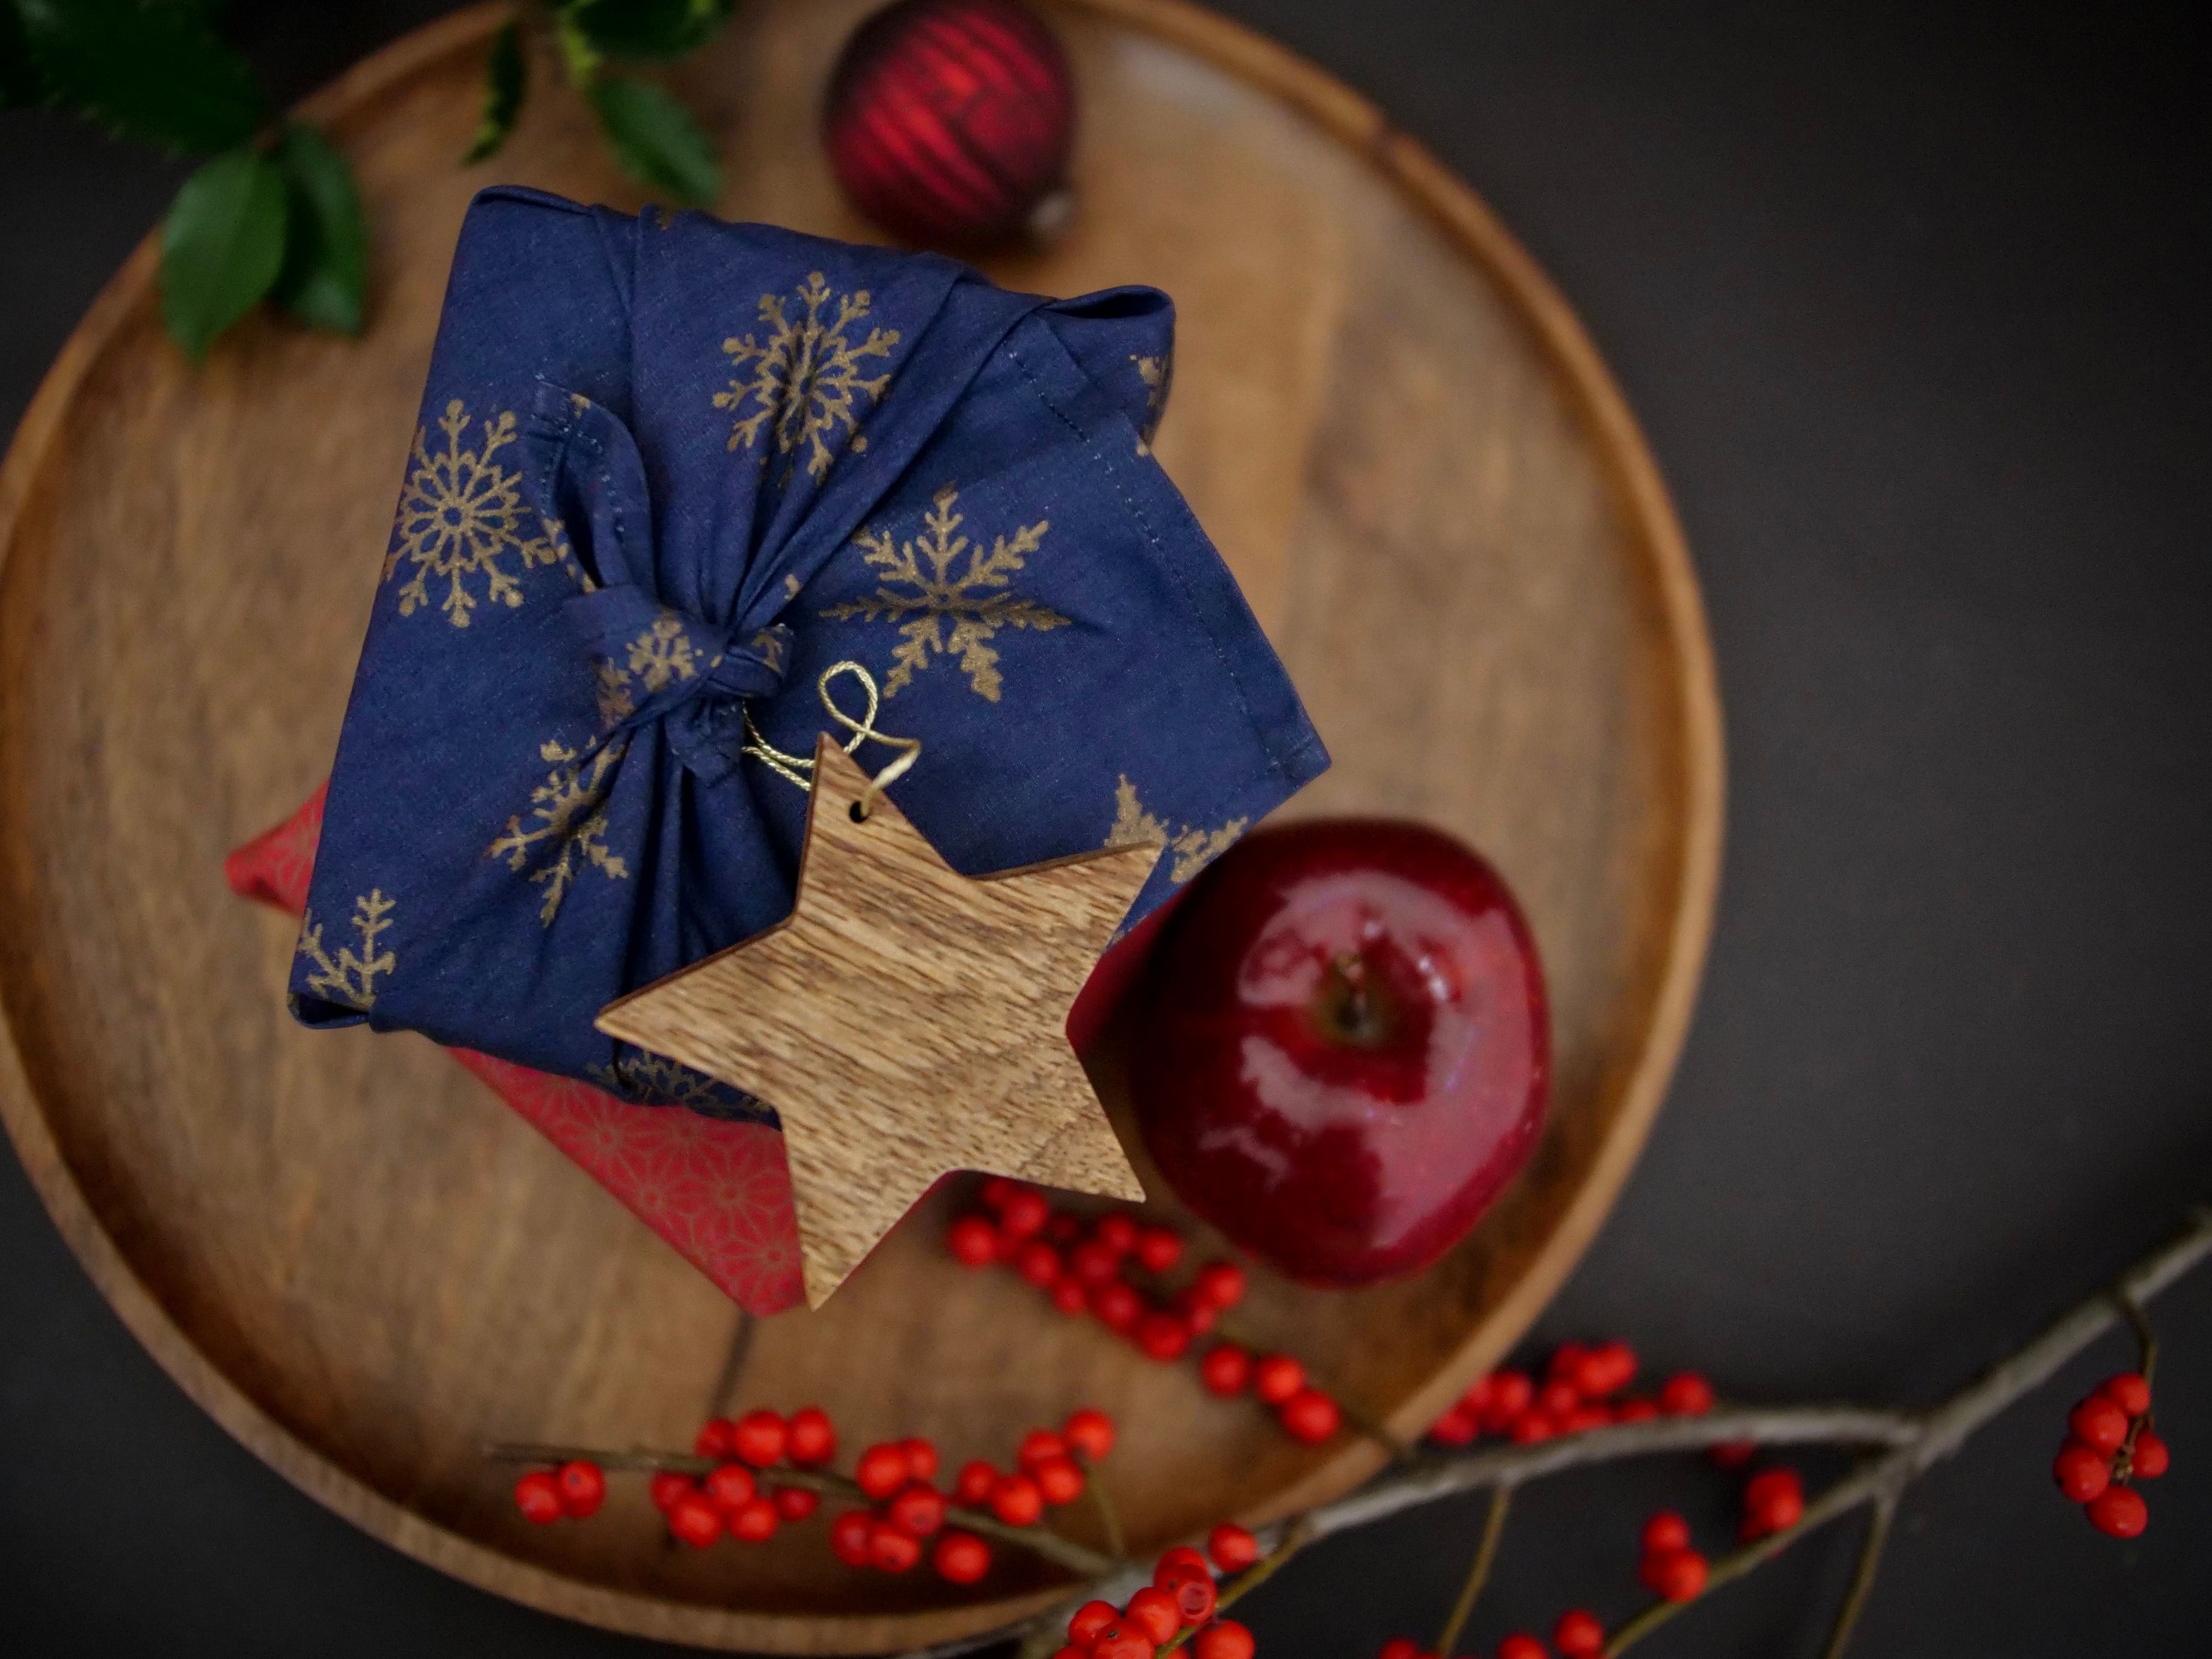 FabRap Midnight Snowflakes Single Sided / Furoshiki wrapping cloth / Reusable gift wrap / Eco-friendly alternative gift wrap